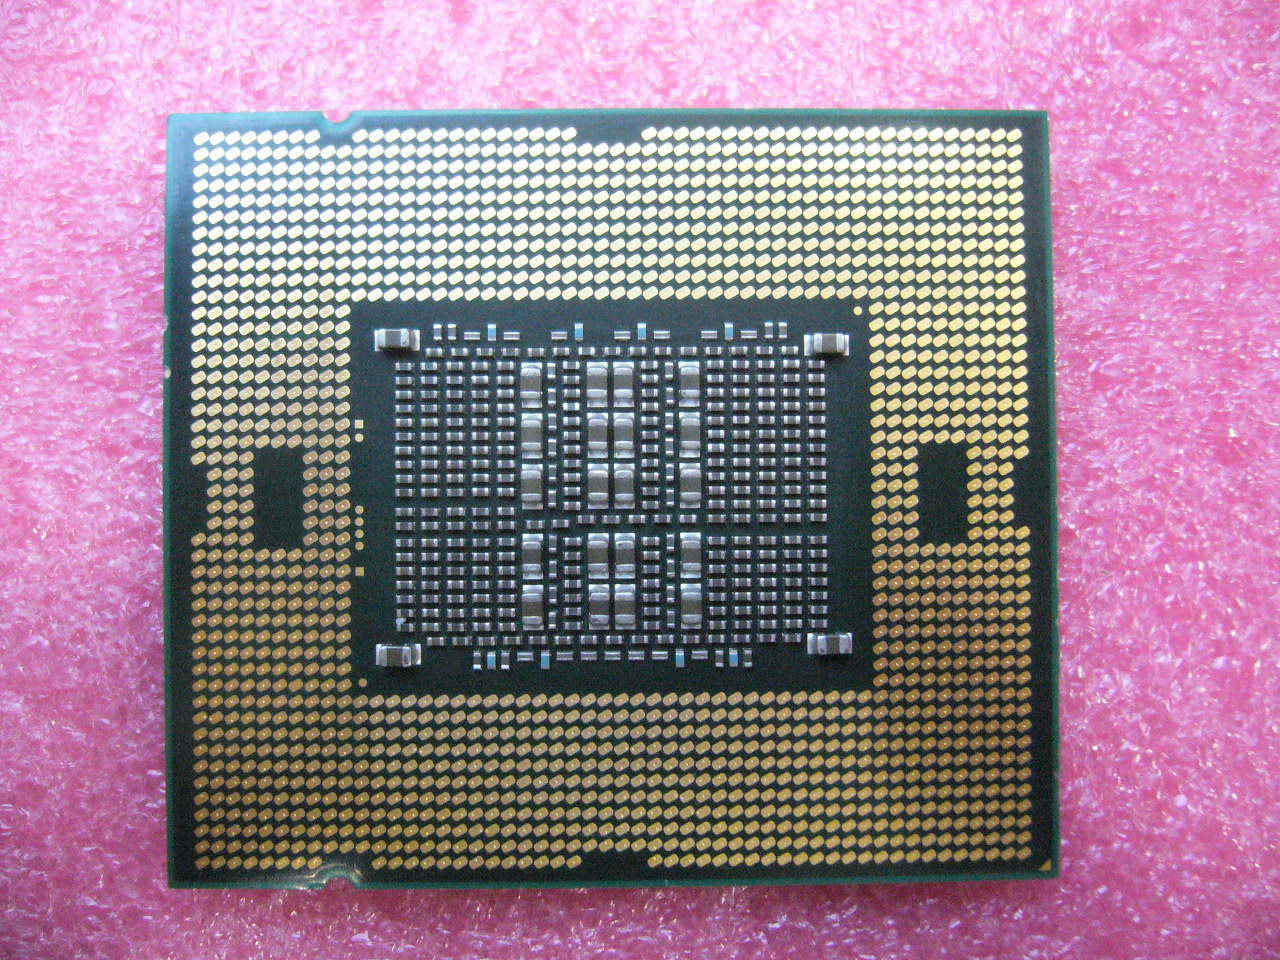 QTY 1x INTEL Six-Cores CPU E7-4807 1.86GHZ/18MB/4.80 LGA1567 SLC3L - zum Schließen ins Bild klicken